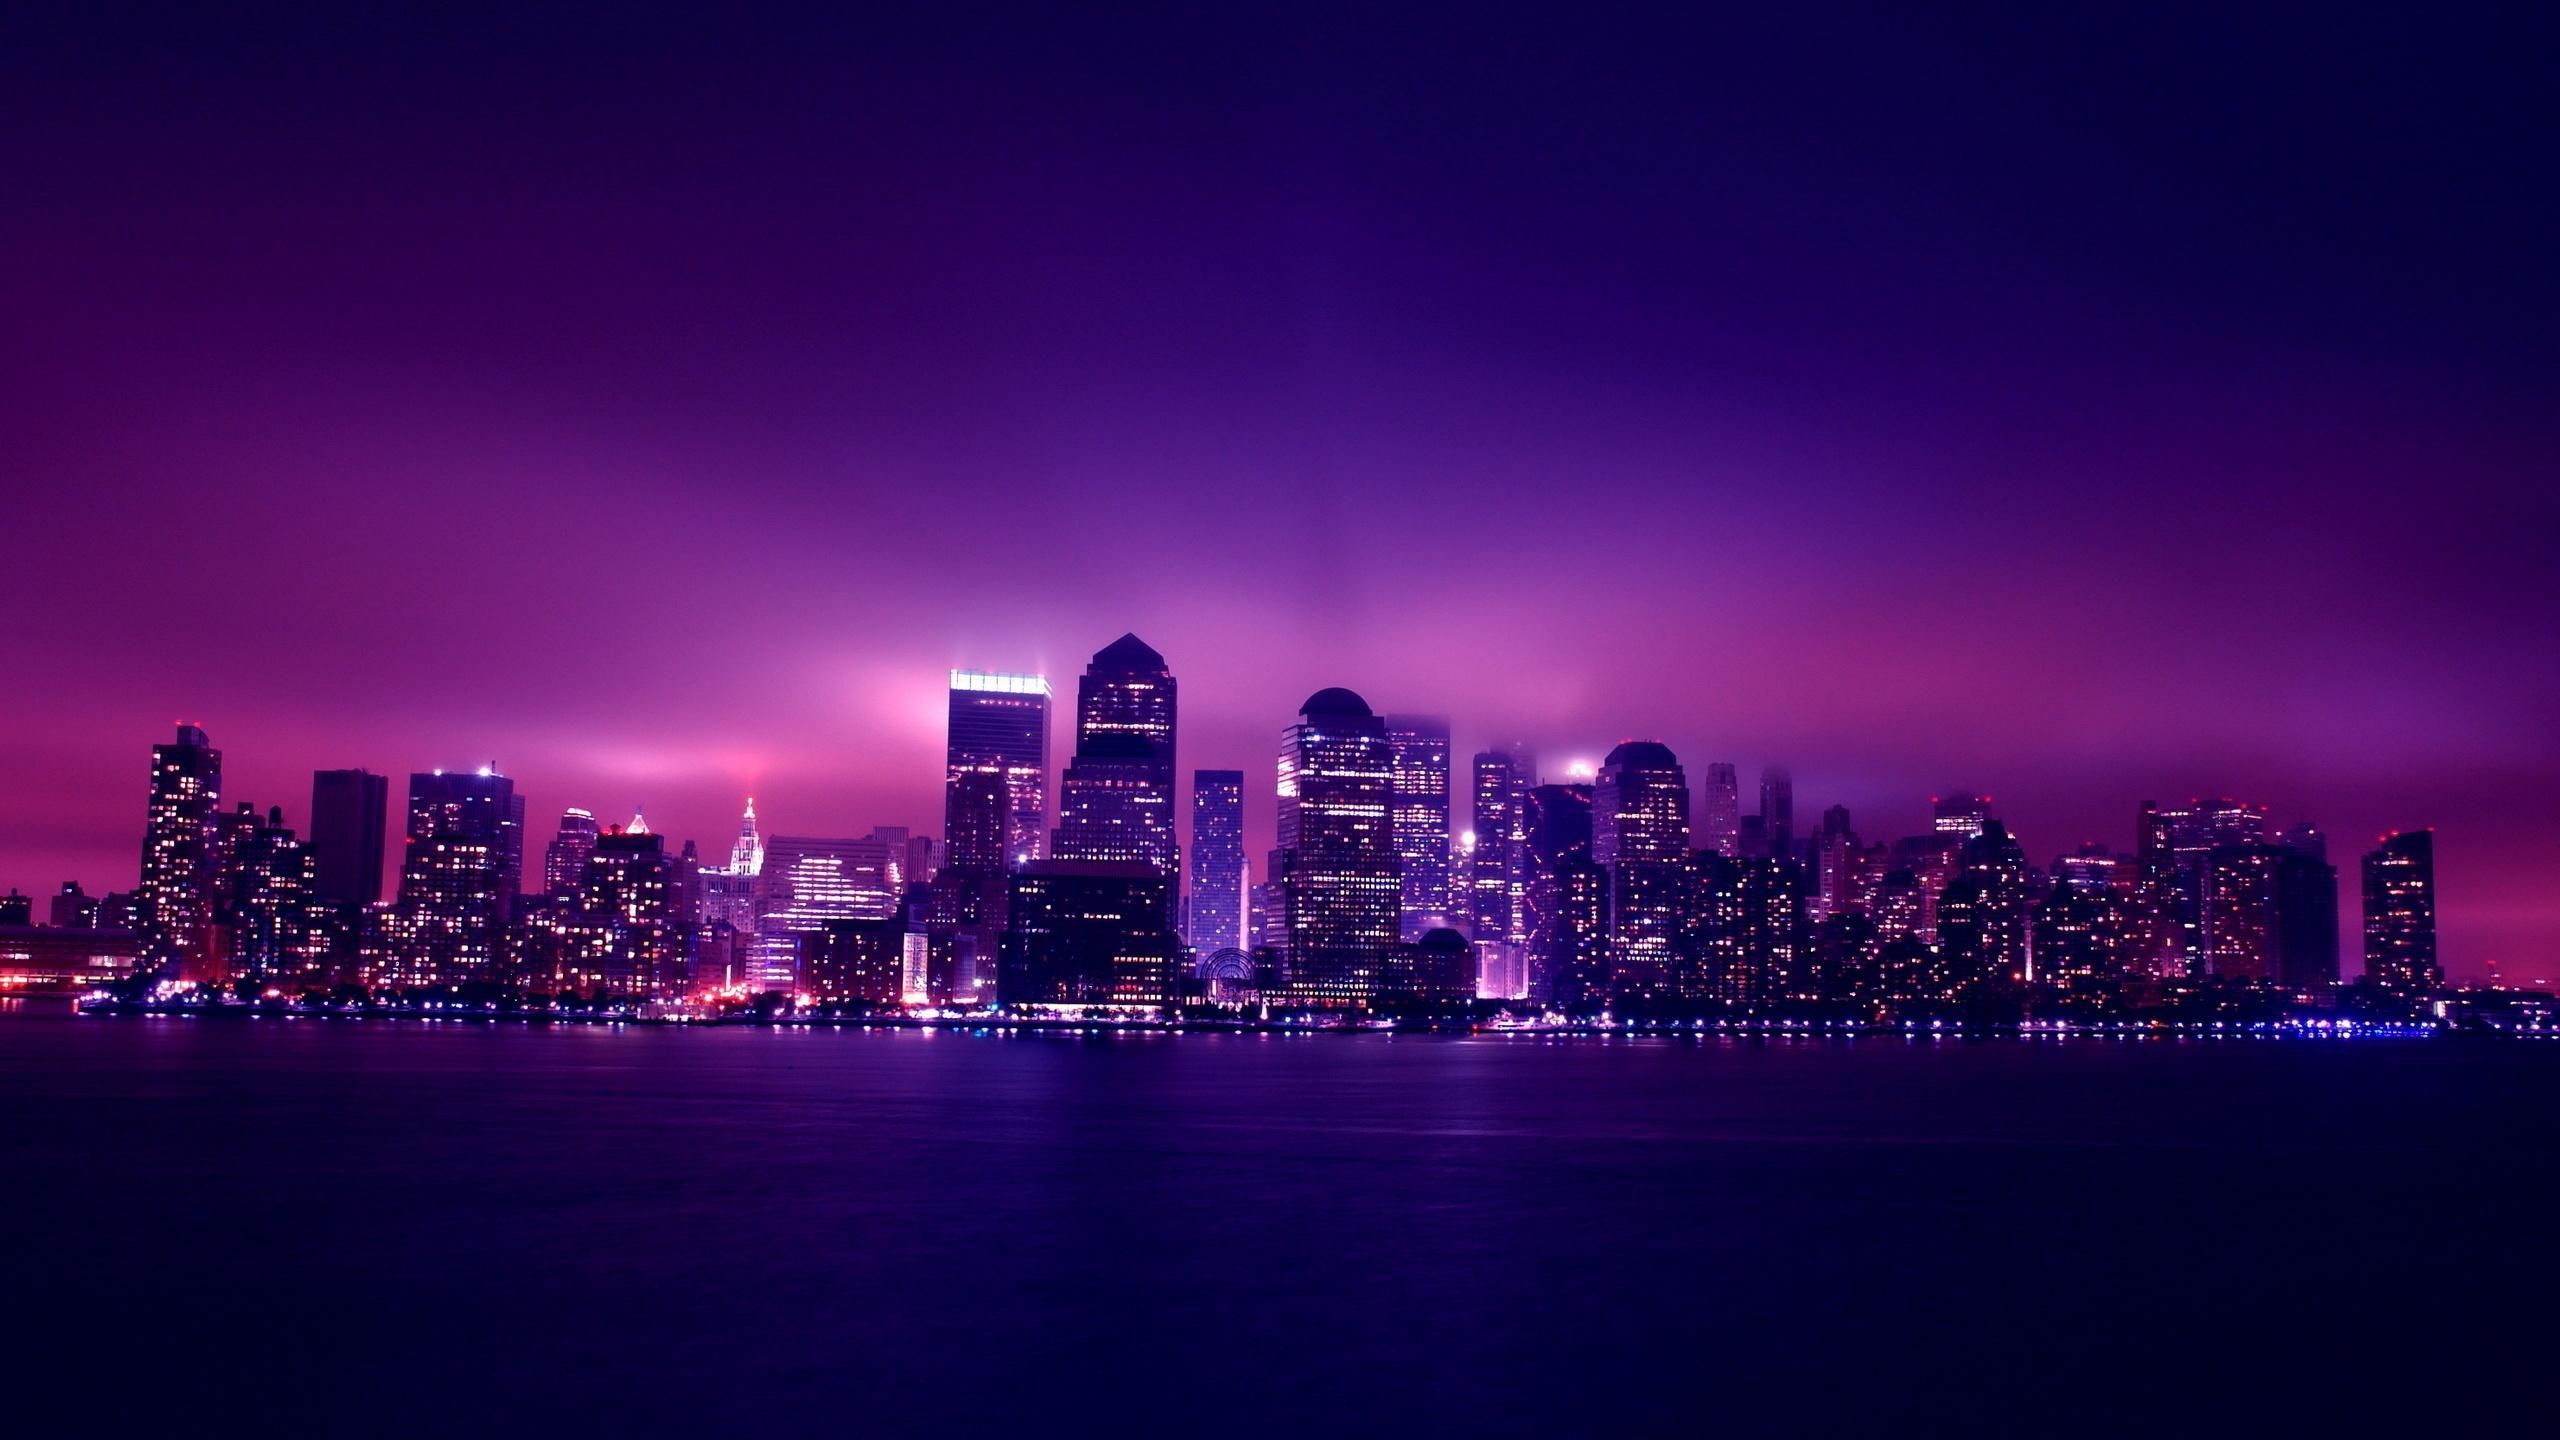 Aesthetic City Night Lights In 2560x1440 Resolution. Night city, City wallpaper, Landscape wallpaper